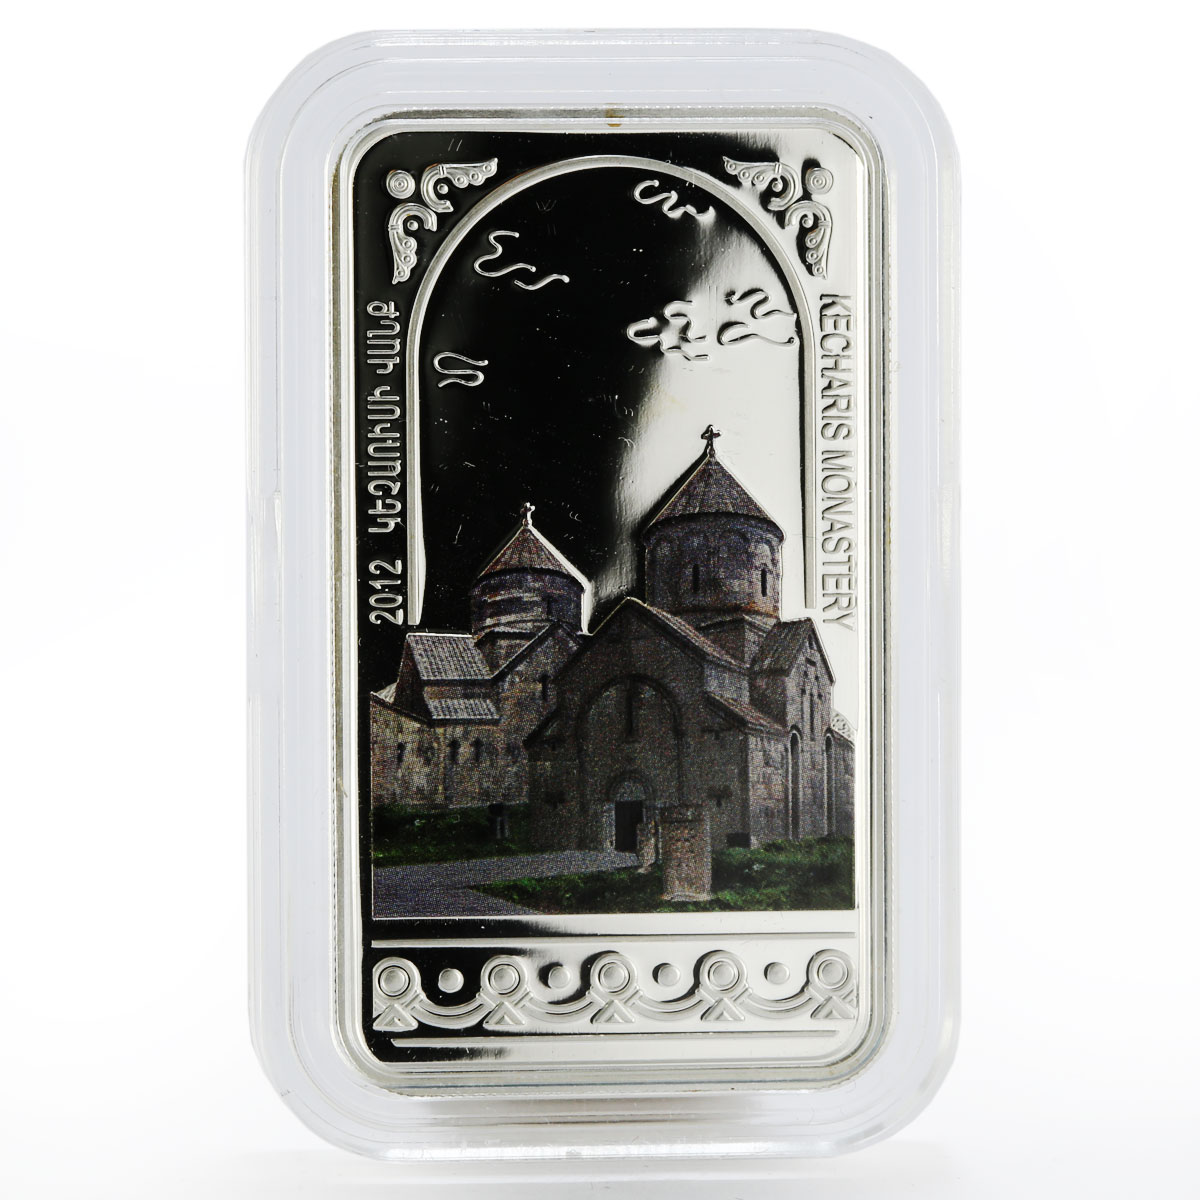 Armenia 1000 dram Monastery Kecharis colored proof silver coin 2012